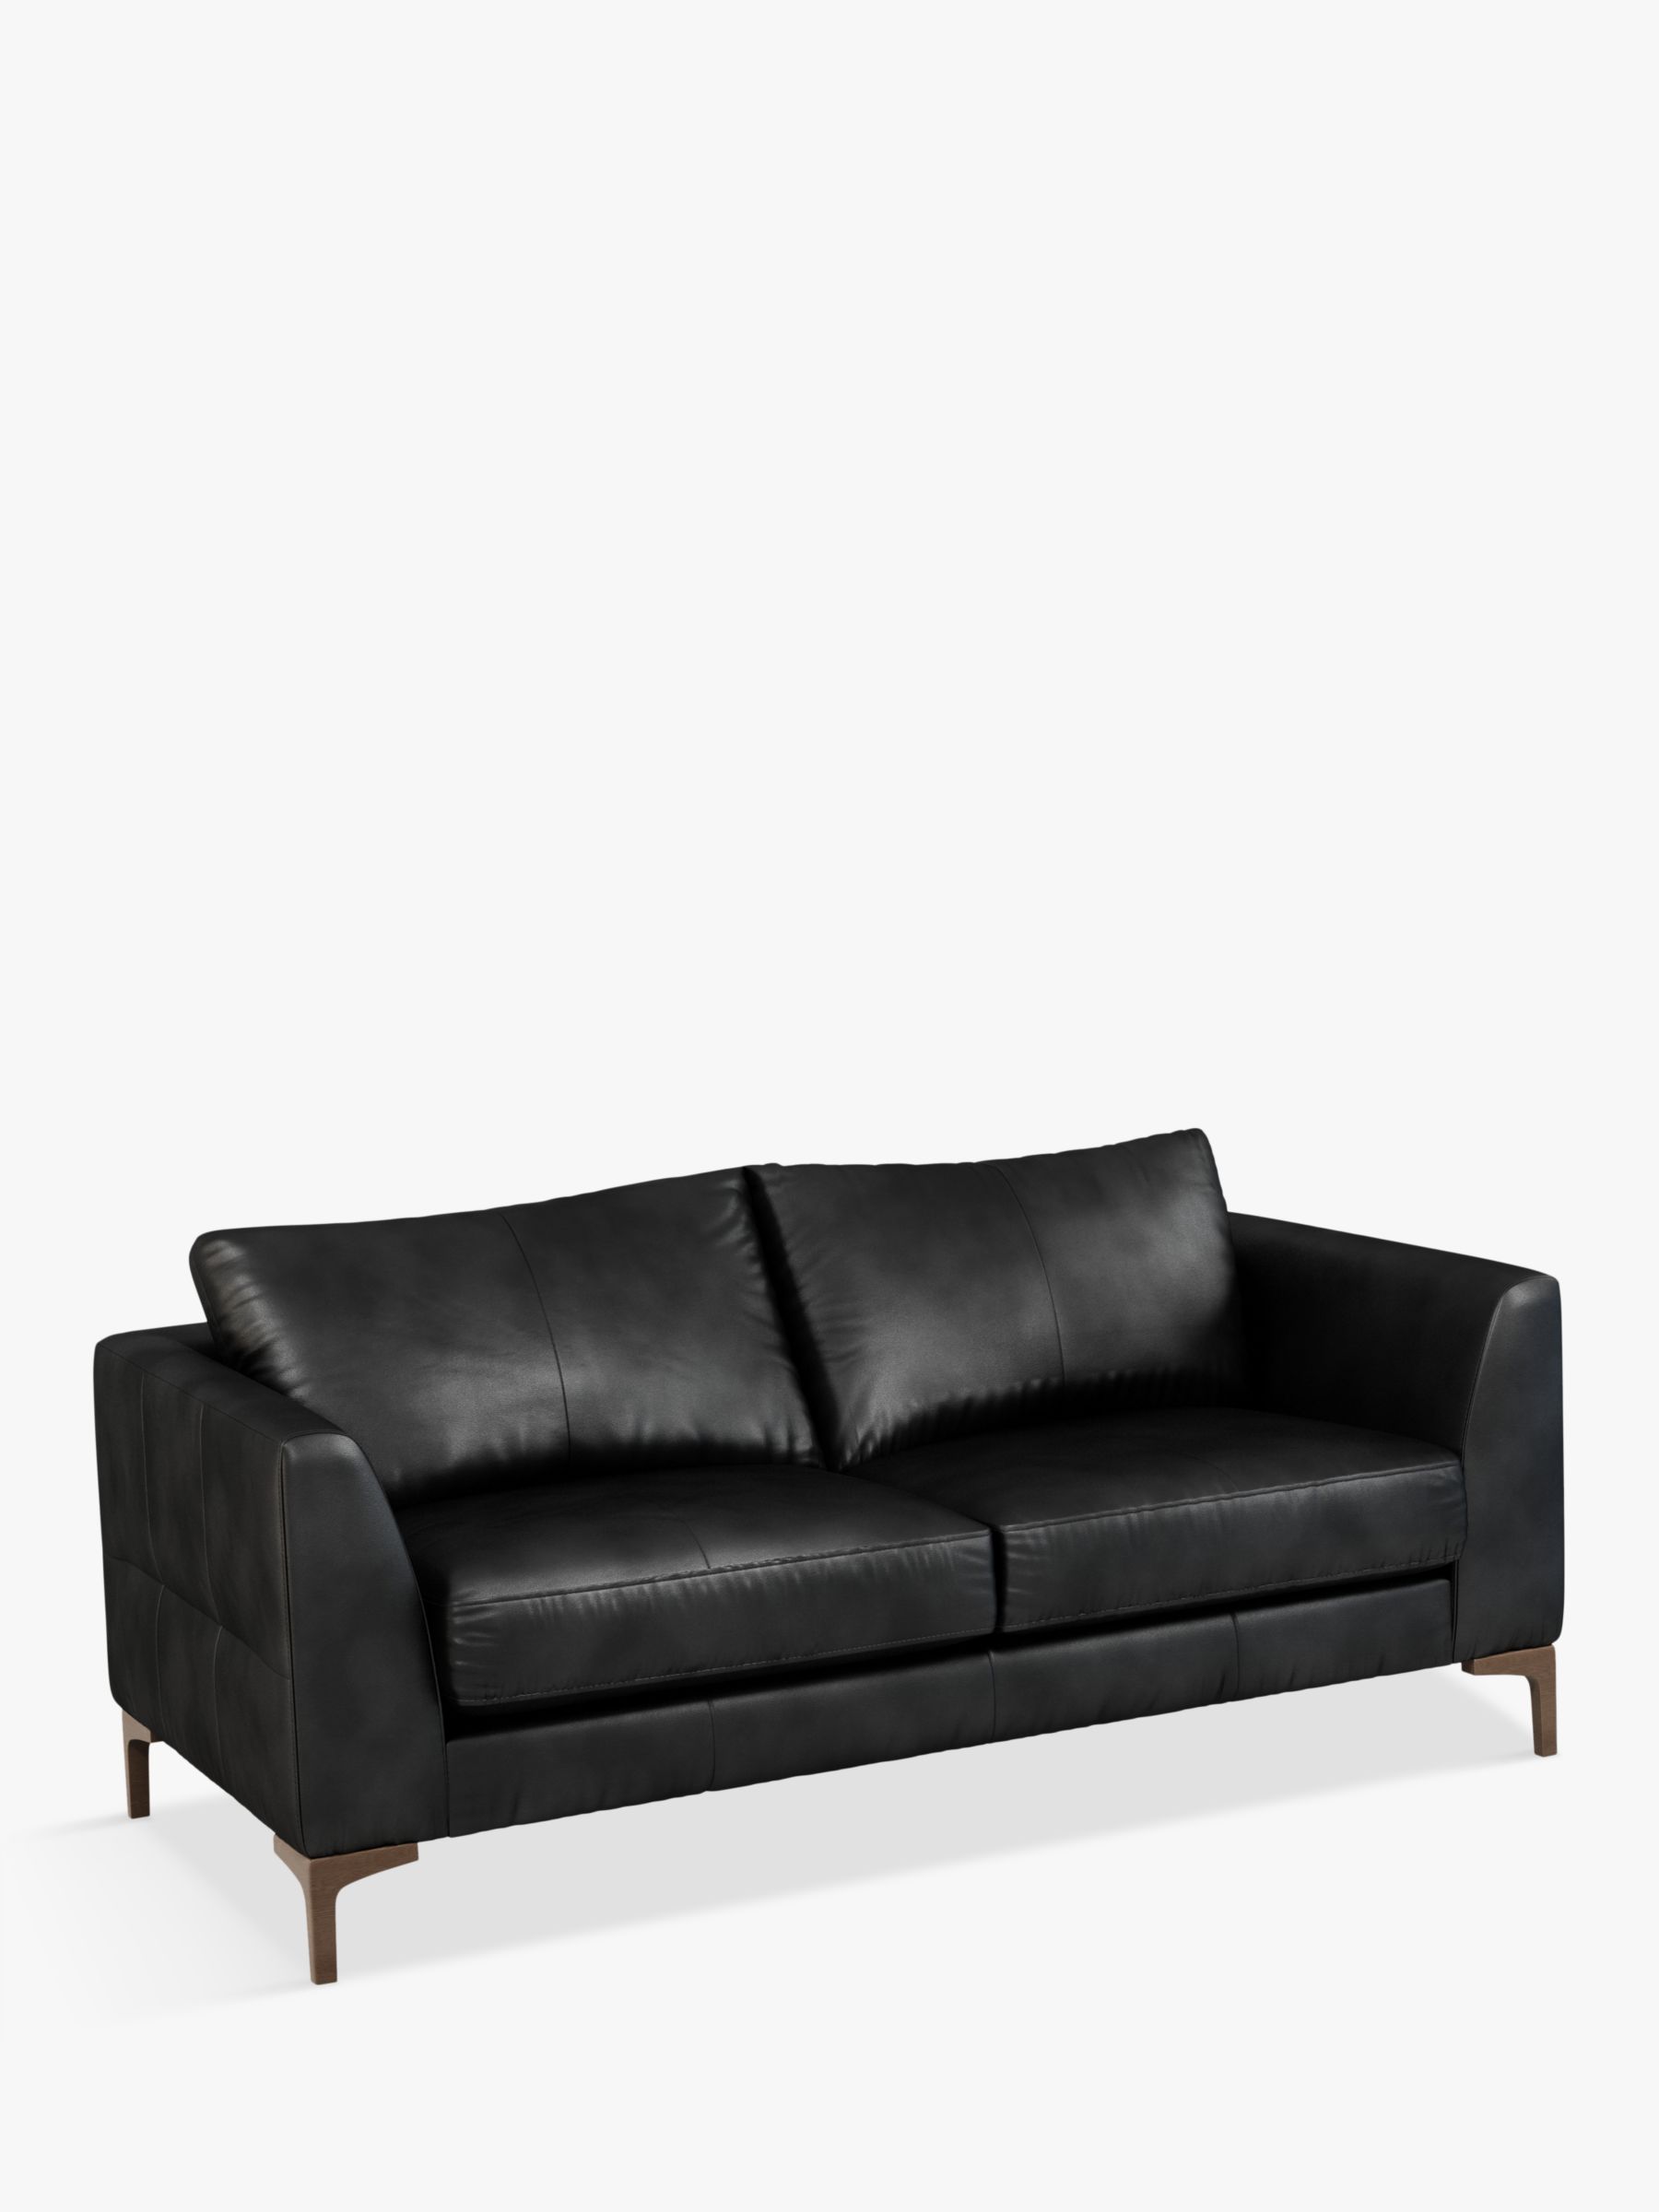 Photo of John lewis belgrave medium 2 seater leather sofa dark leg